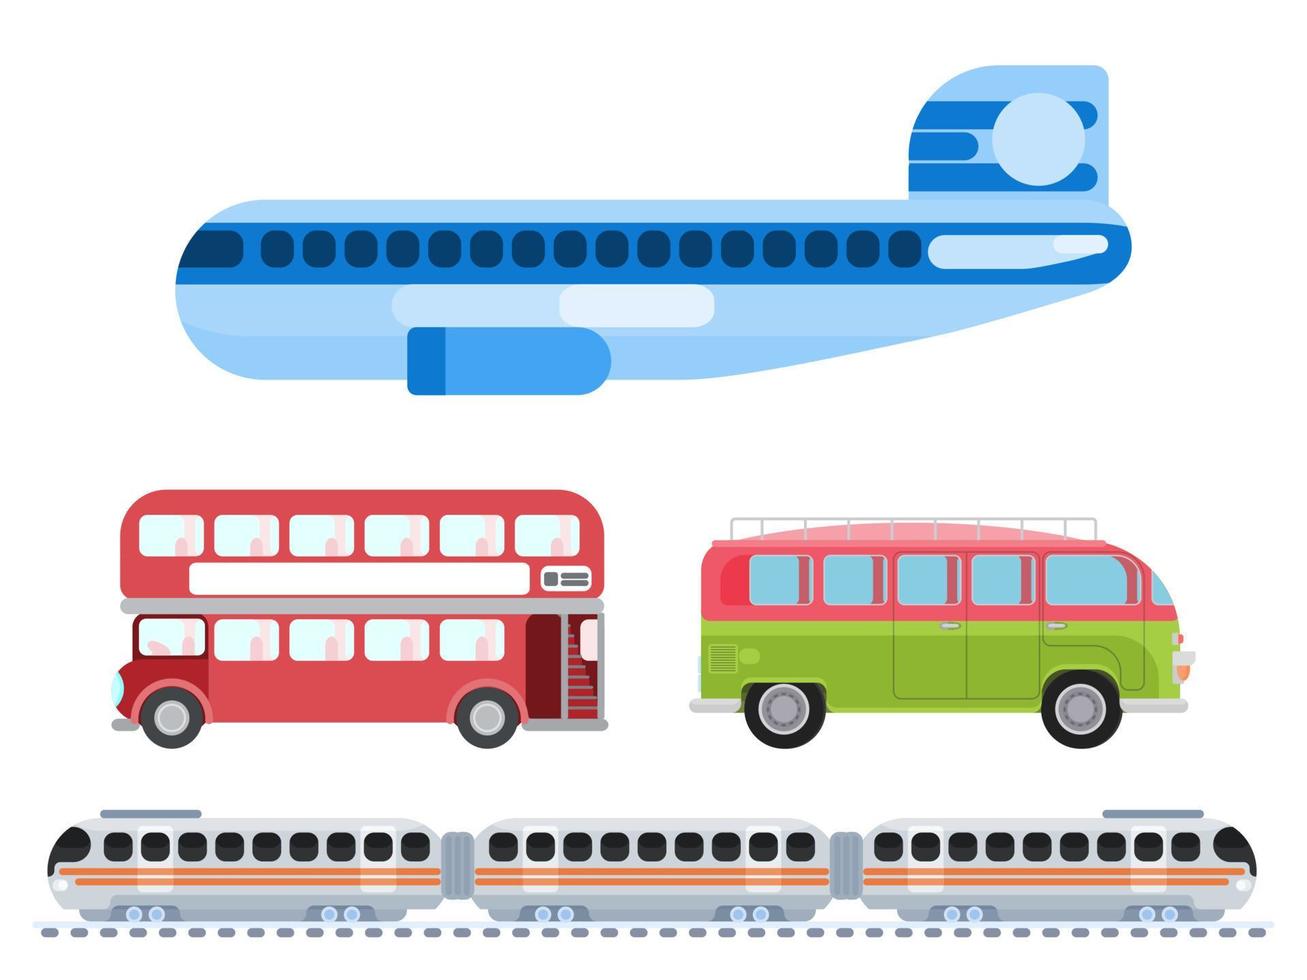 bus vliegtuig auto trein verschillende voertuigen. vlakke stijl vector